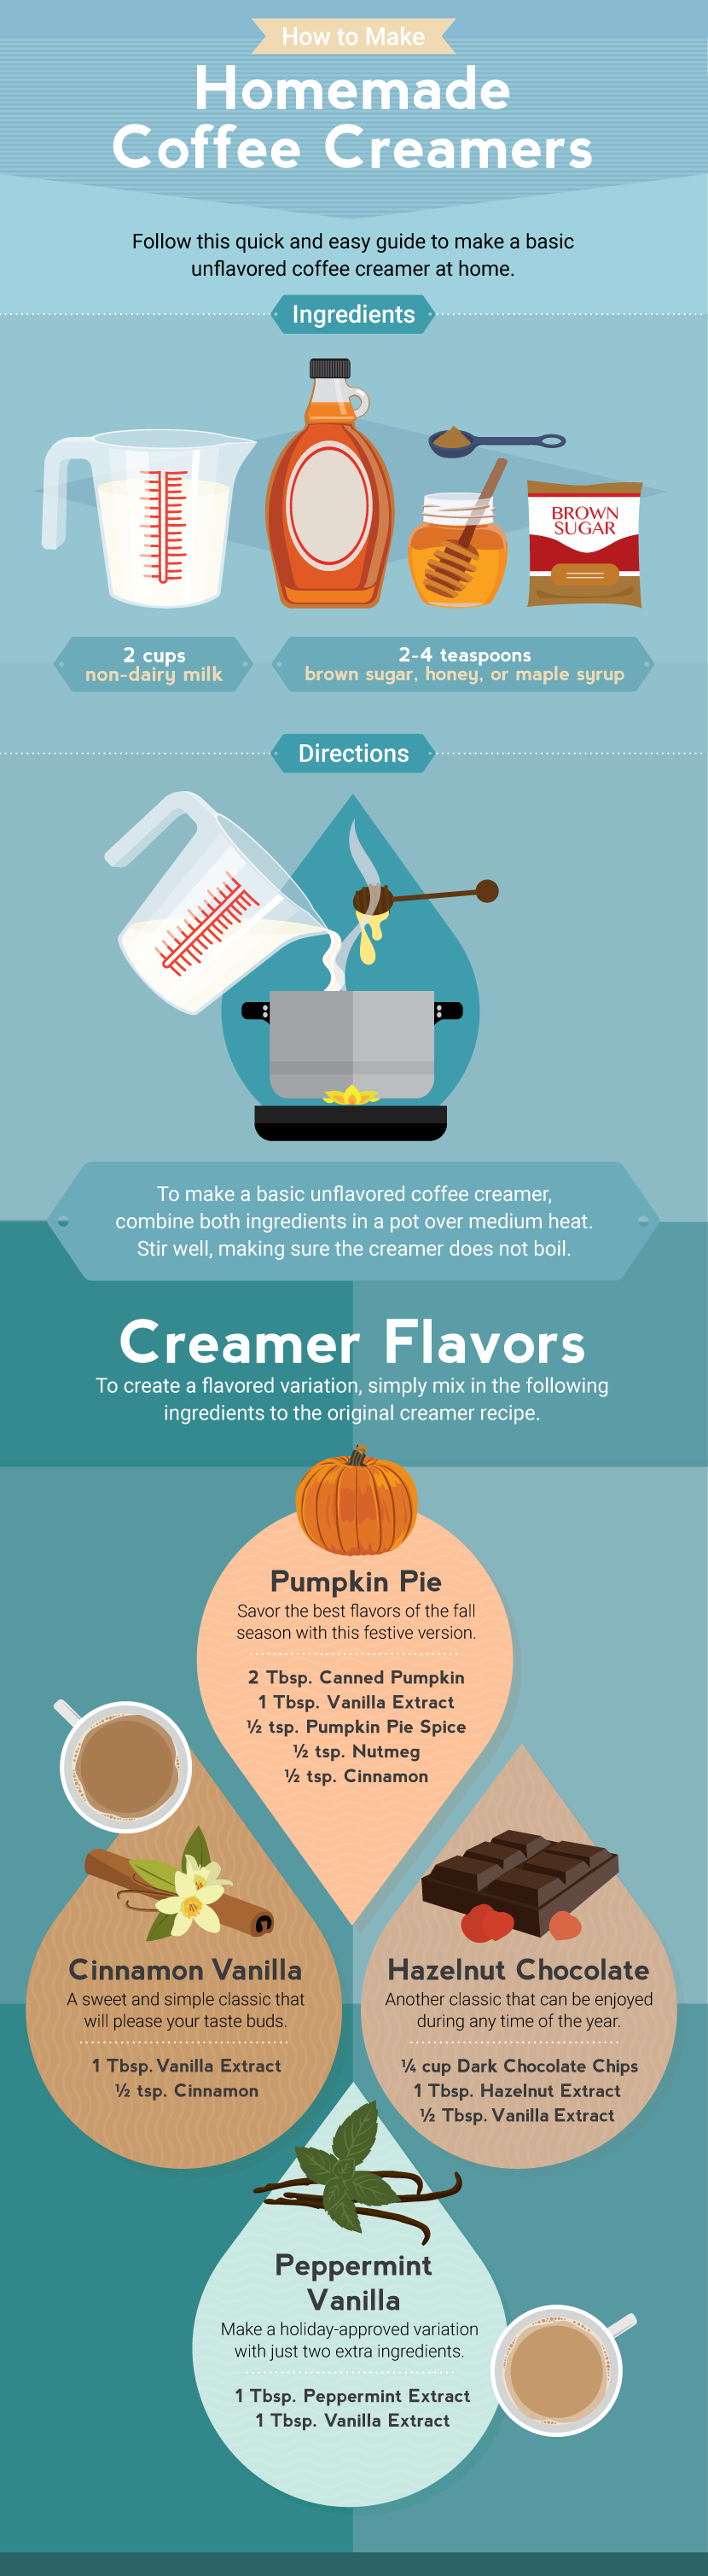 Homemade Non-Dairy Coffee Creamer Recipe (3 Ingredients)